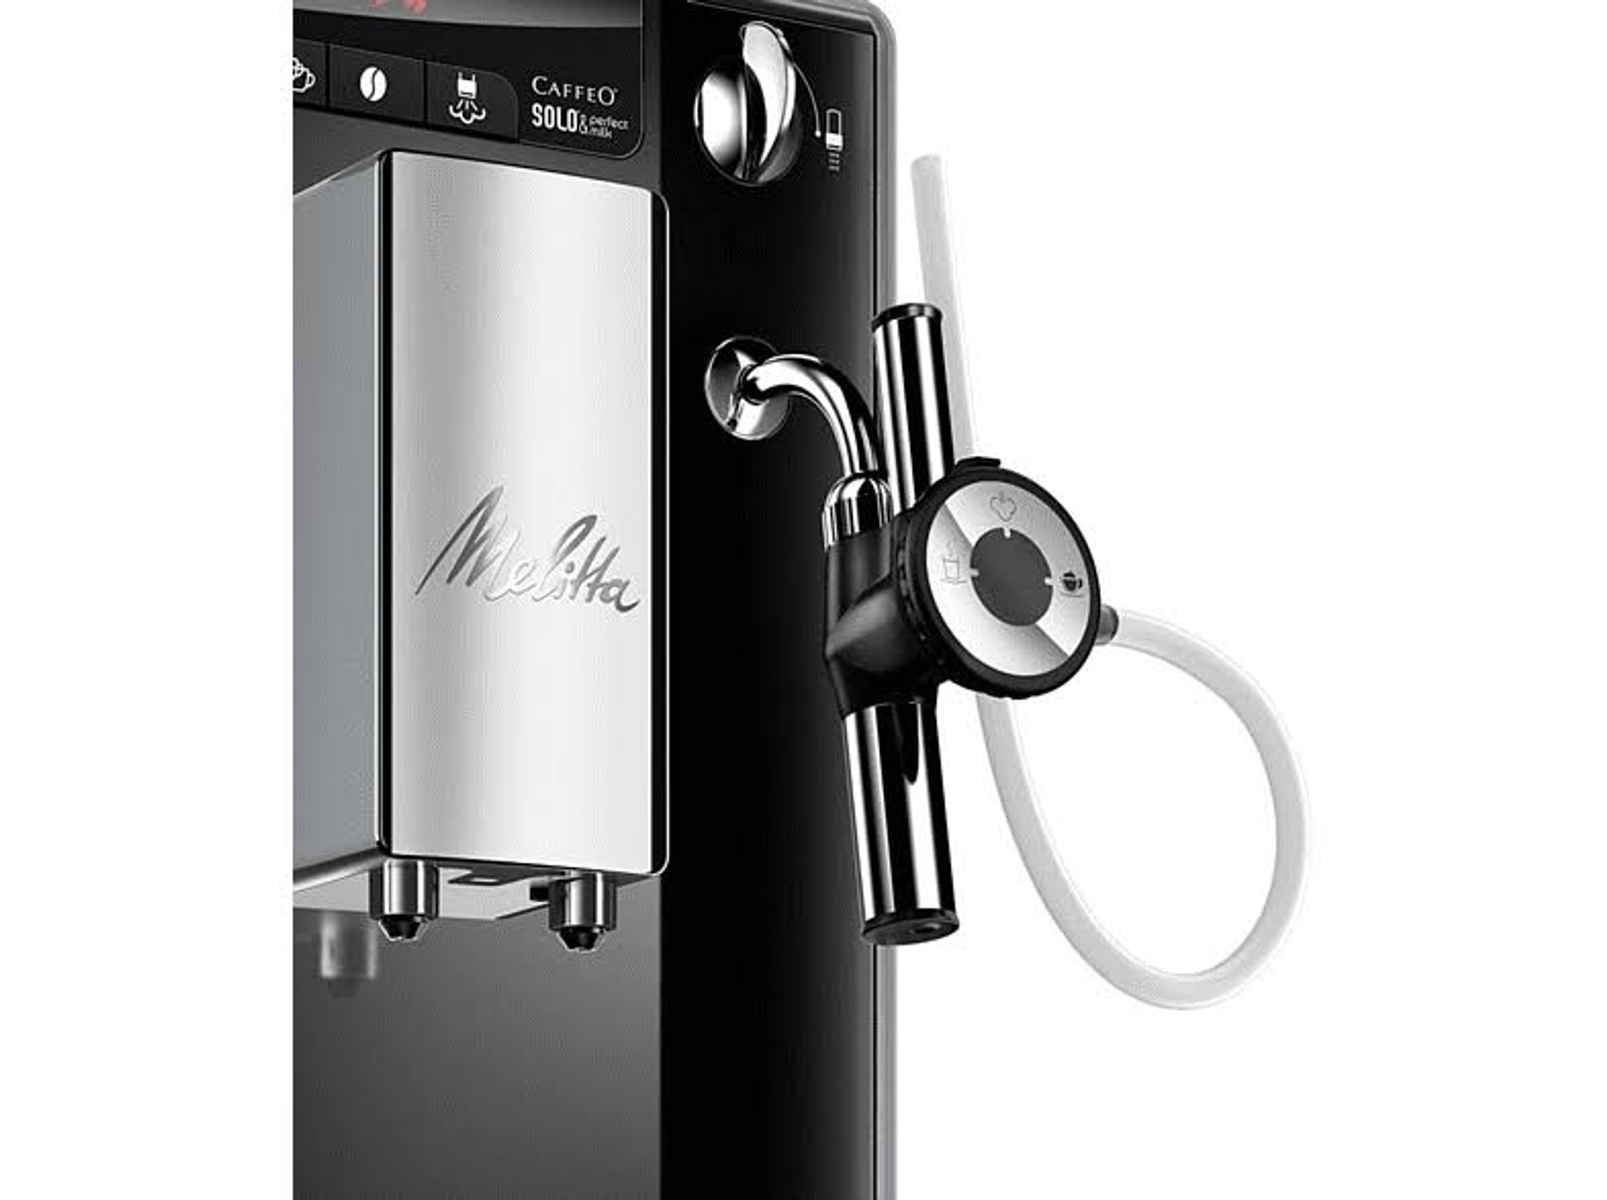 MELITTA Solo & 957-201 Milk Kaffeevollautomat Perfect E schwarz